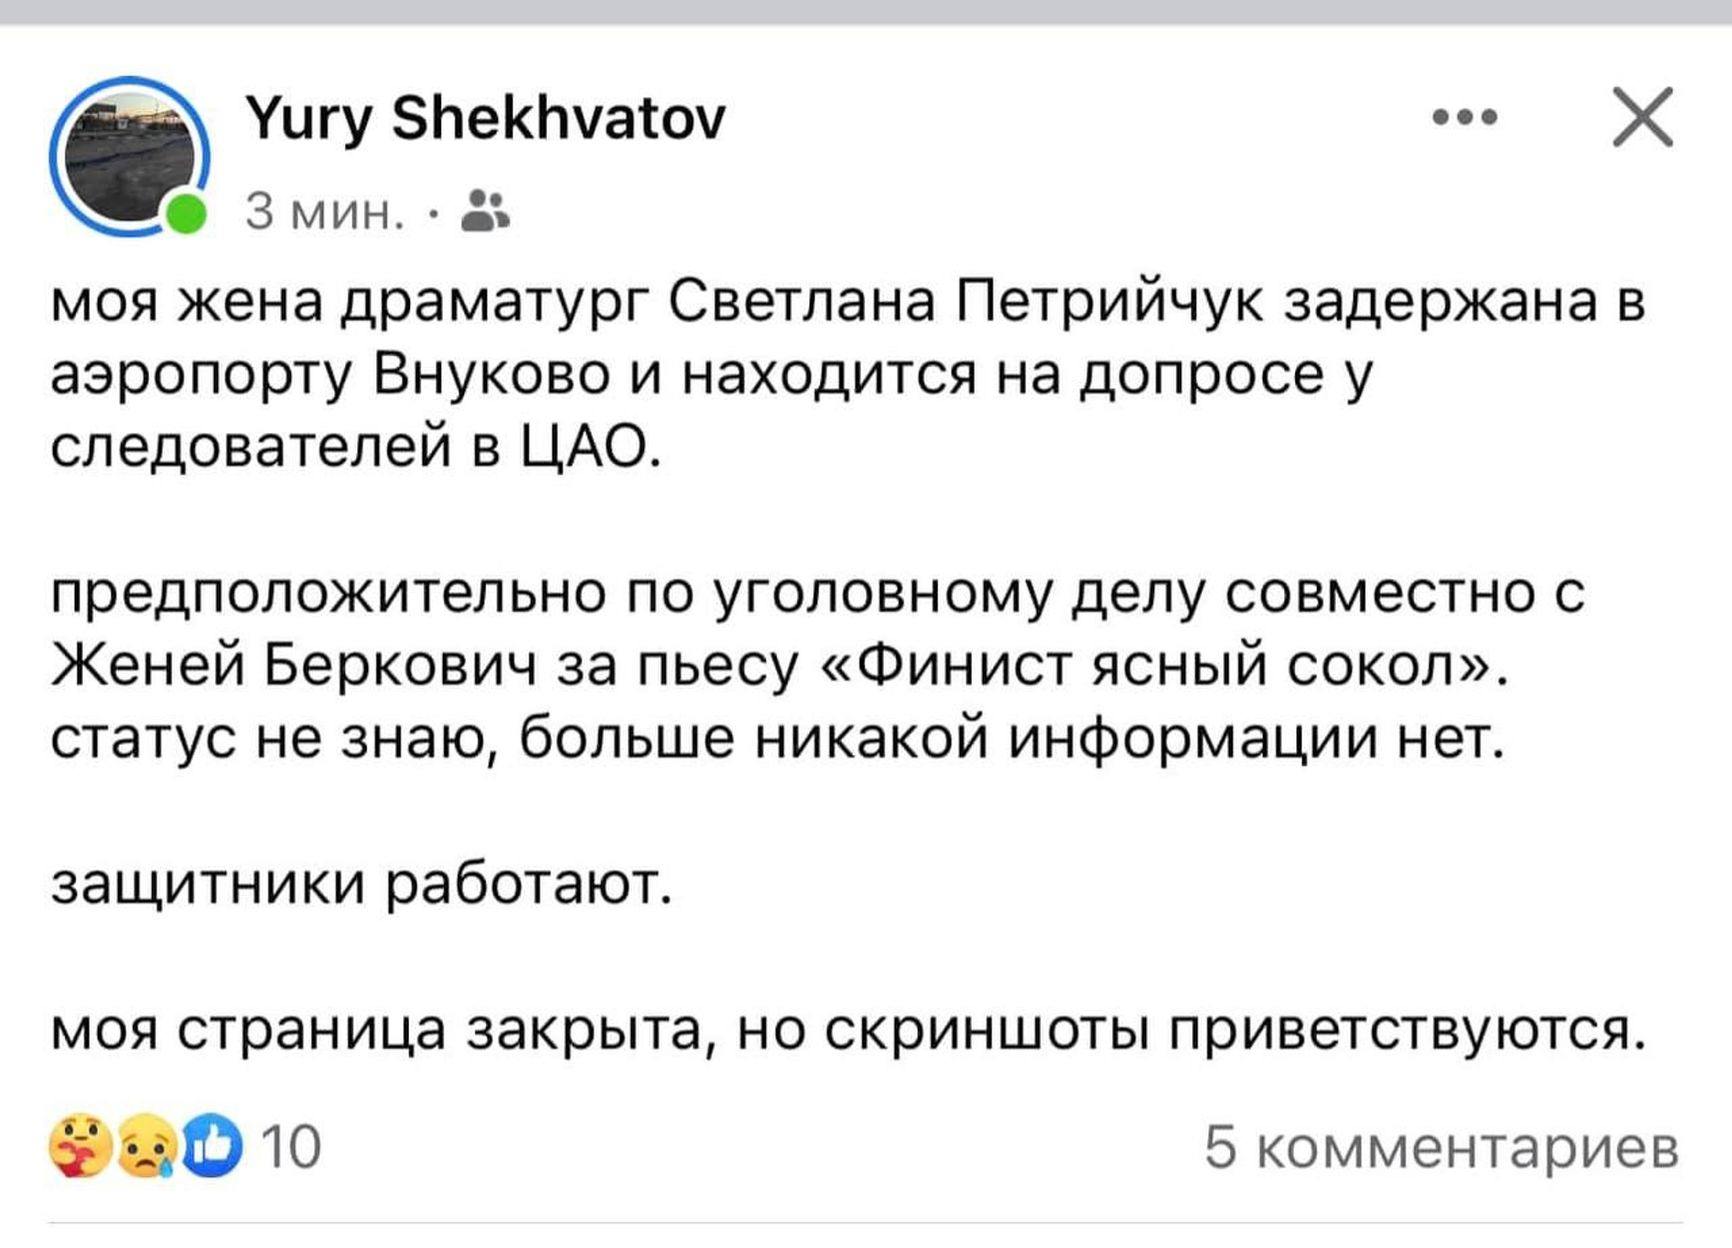 A screenshot from Svetlana Petriychuk's husband's Facebook profile